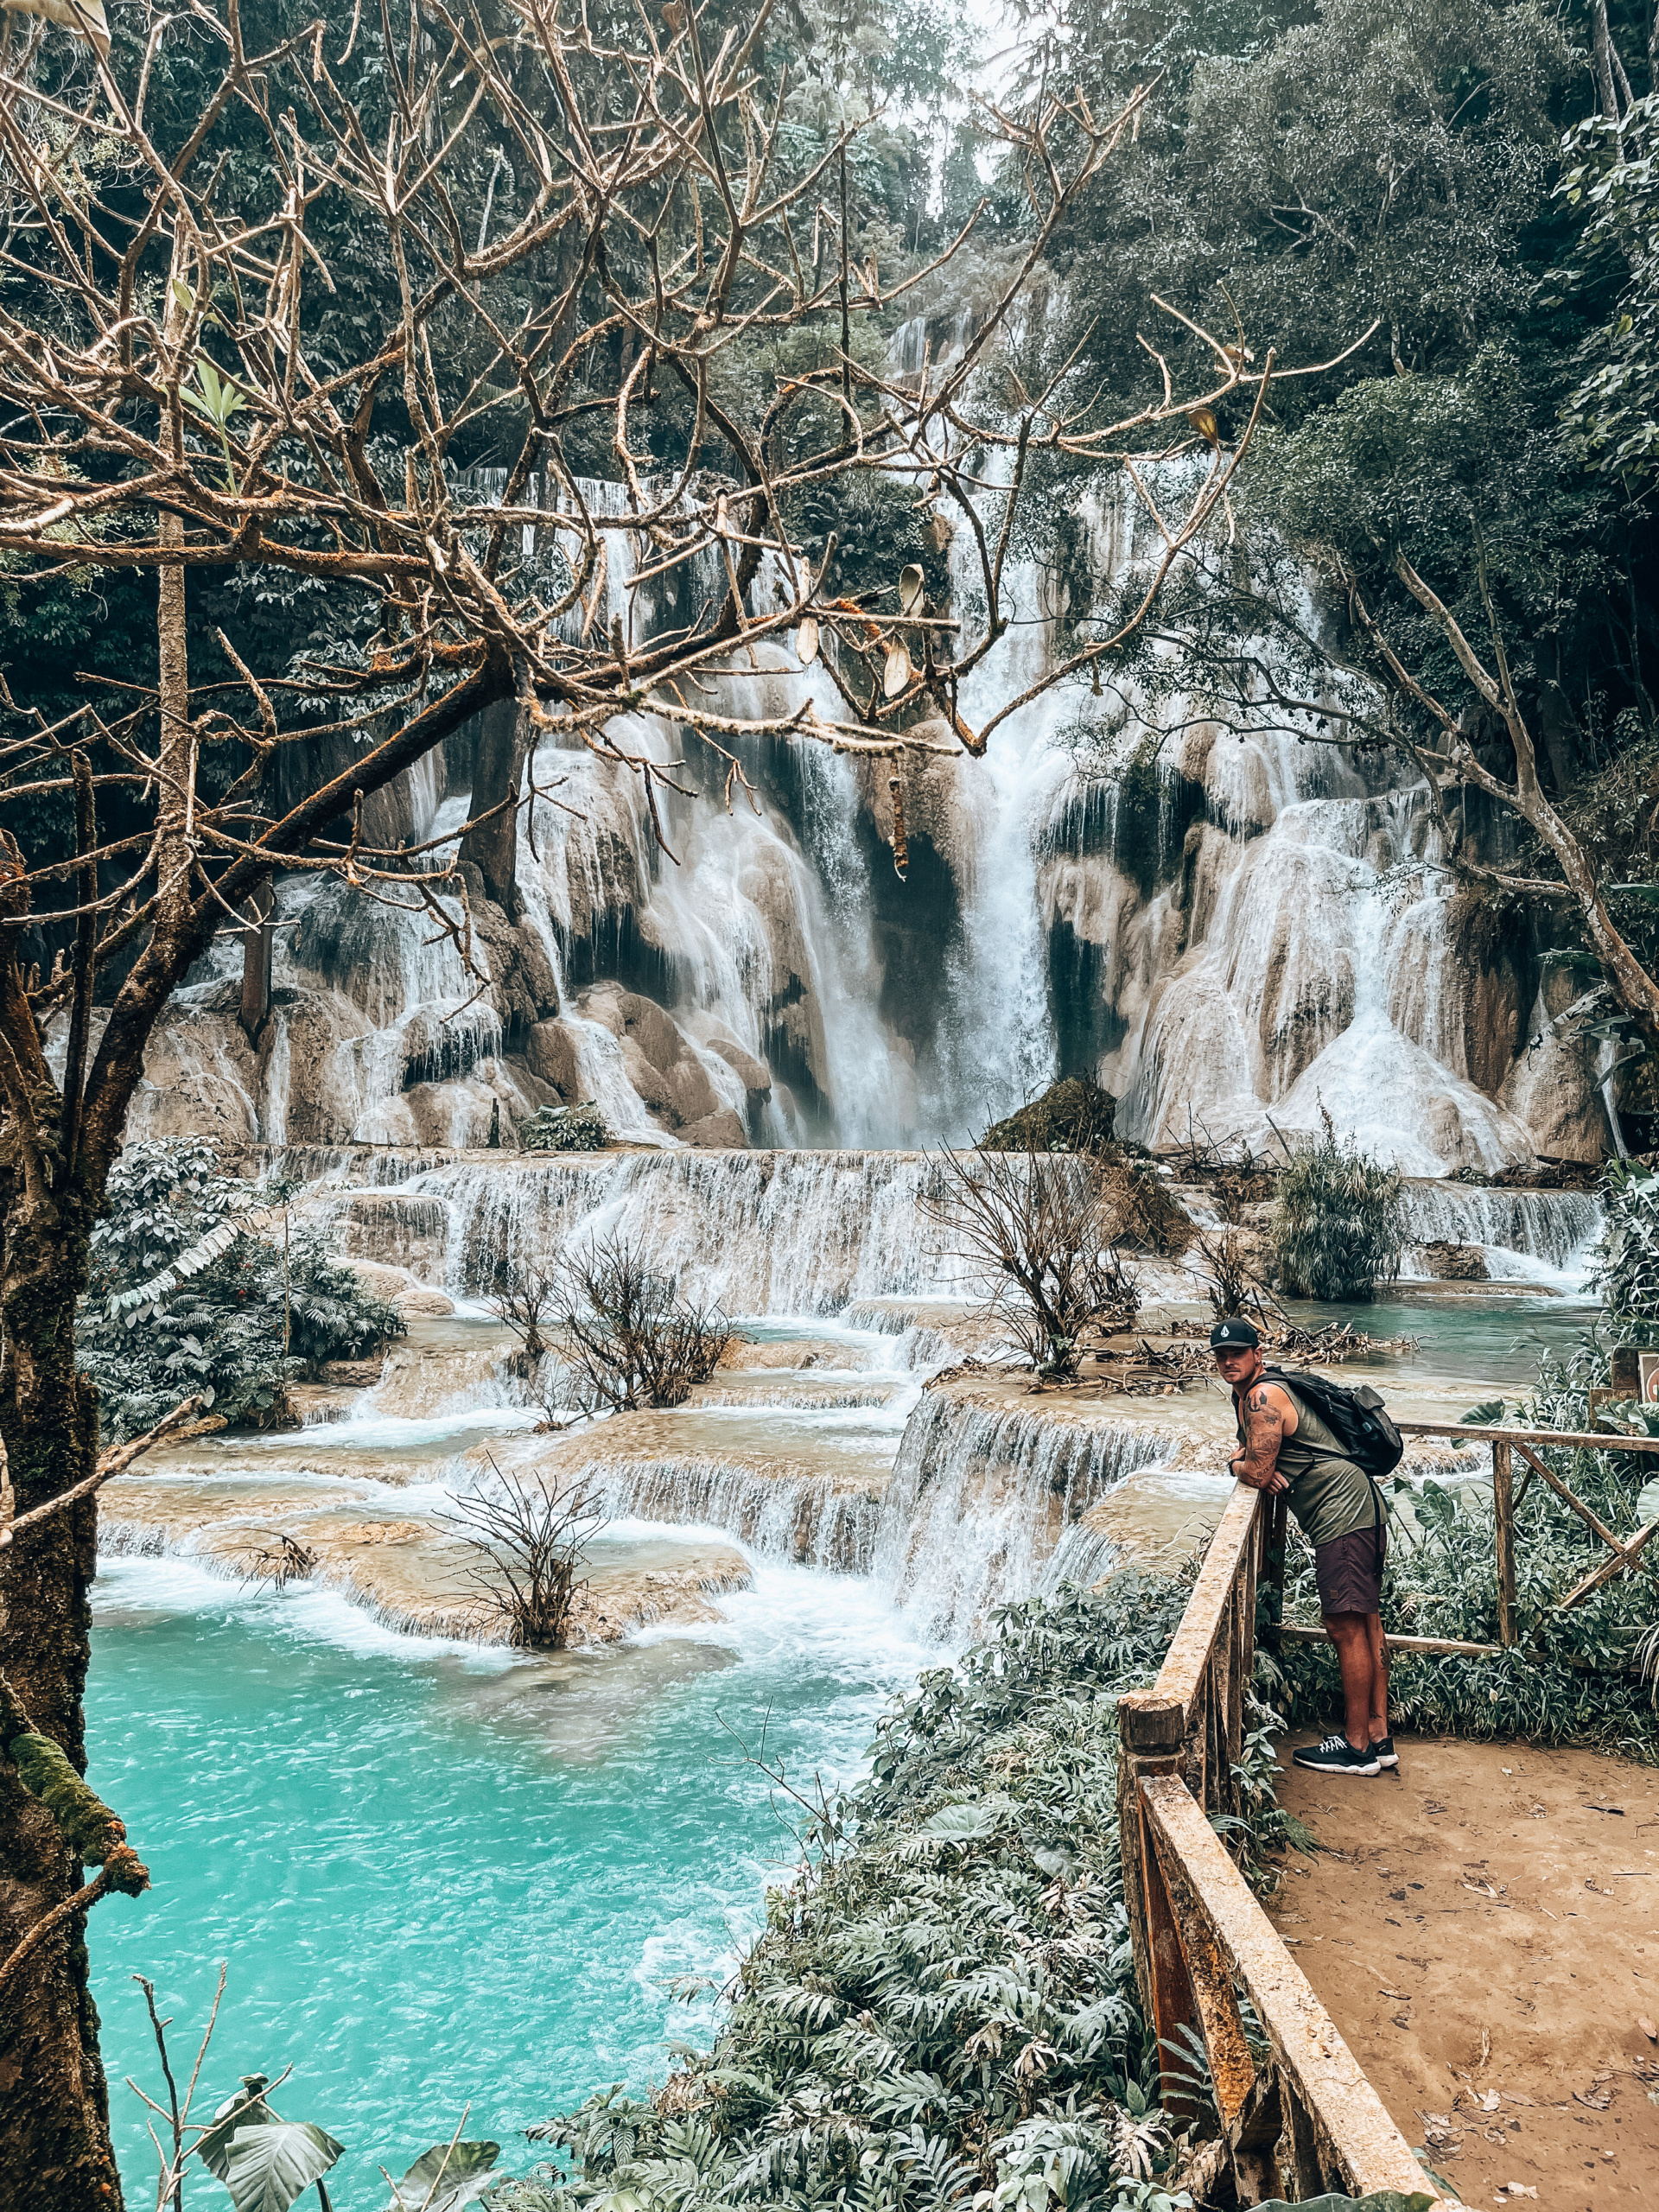 Wat te doen in Laos? Kuang Si waterfall